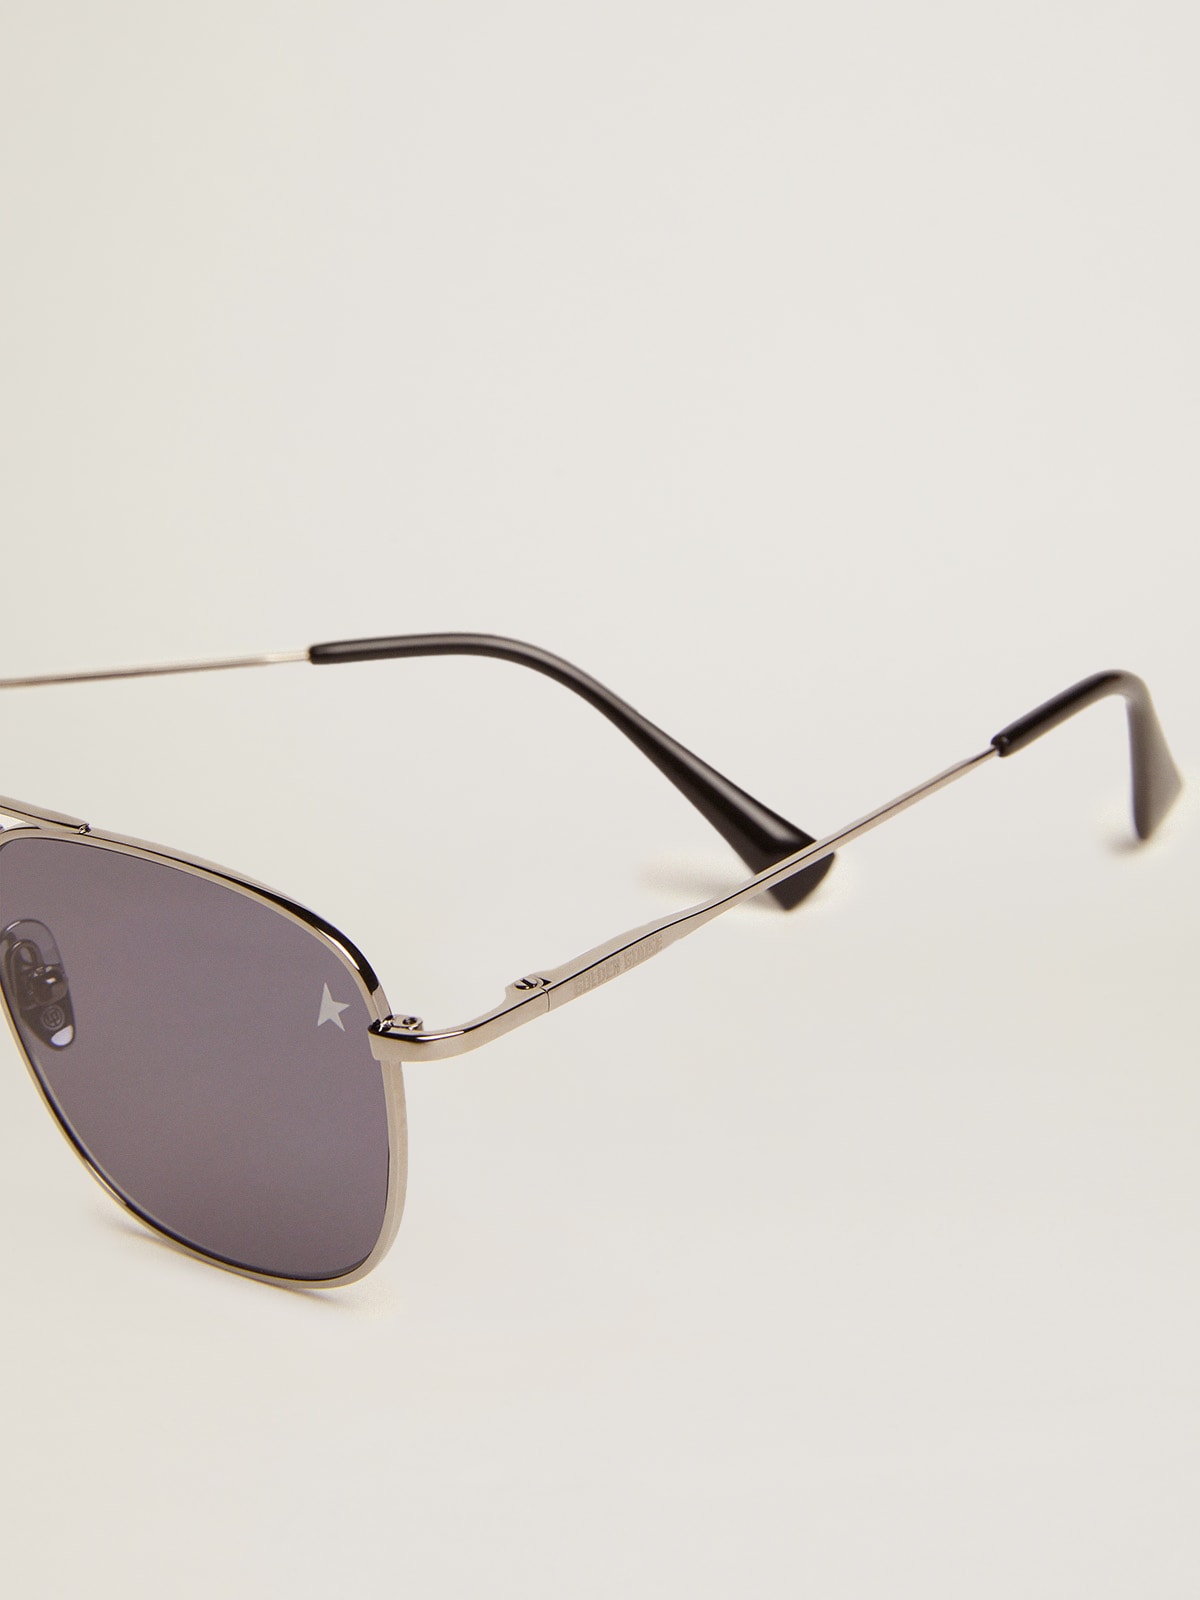 Golden Goose - Roger aviator sunglasses with black frame and black lenses in 